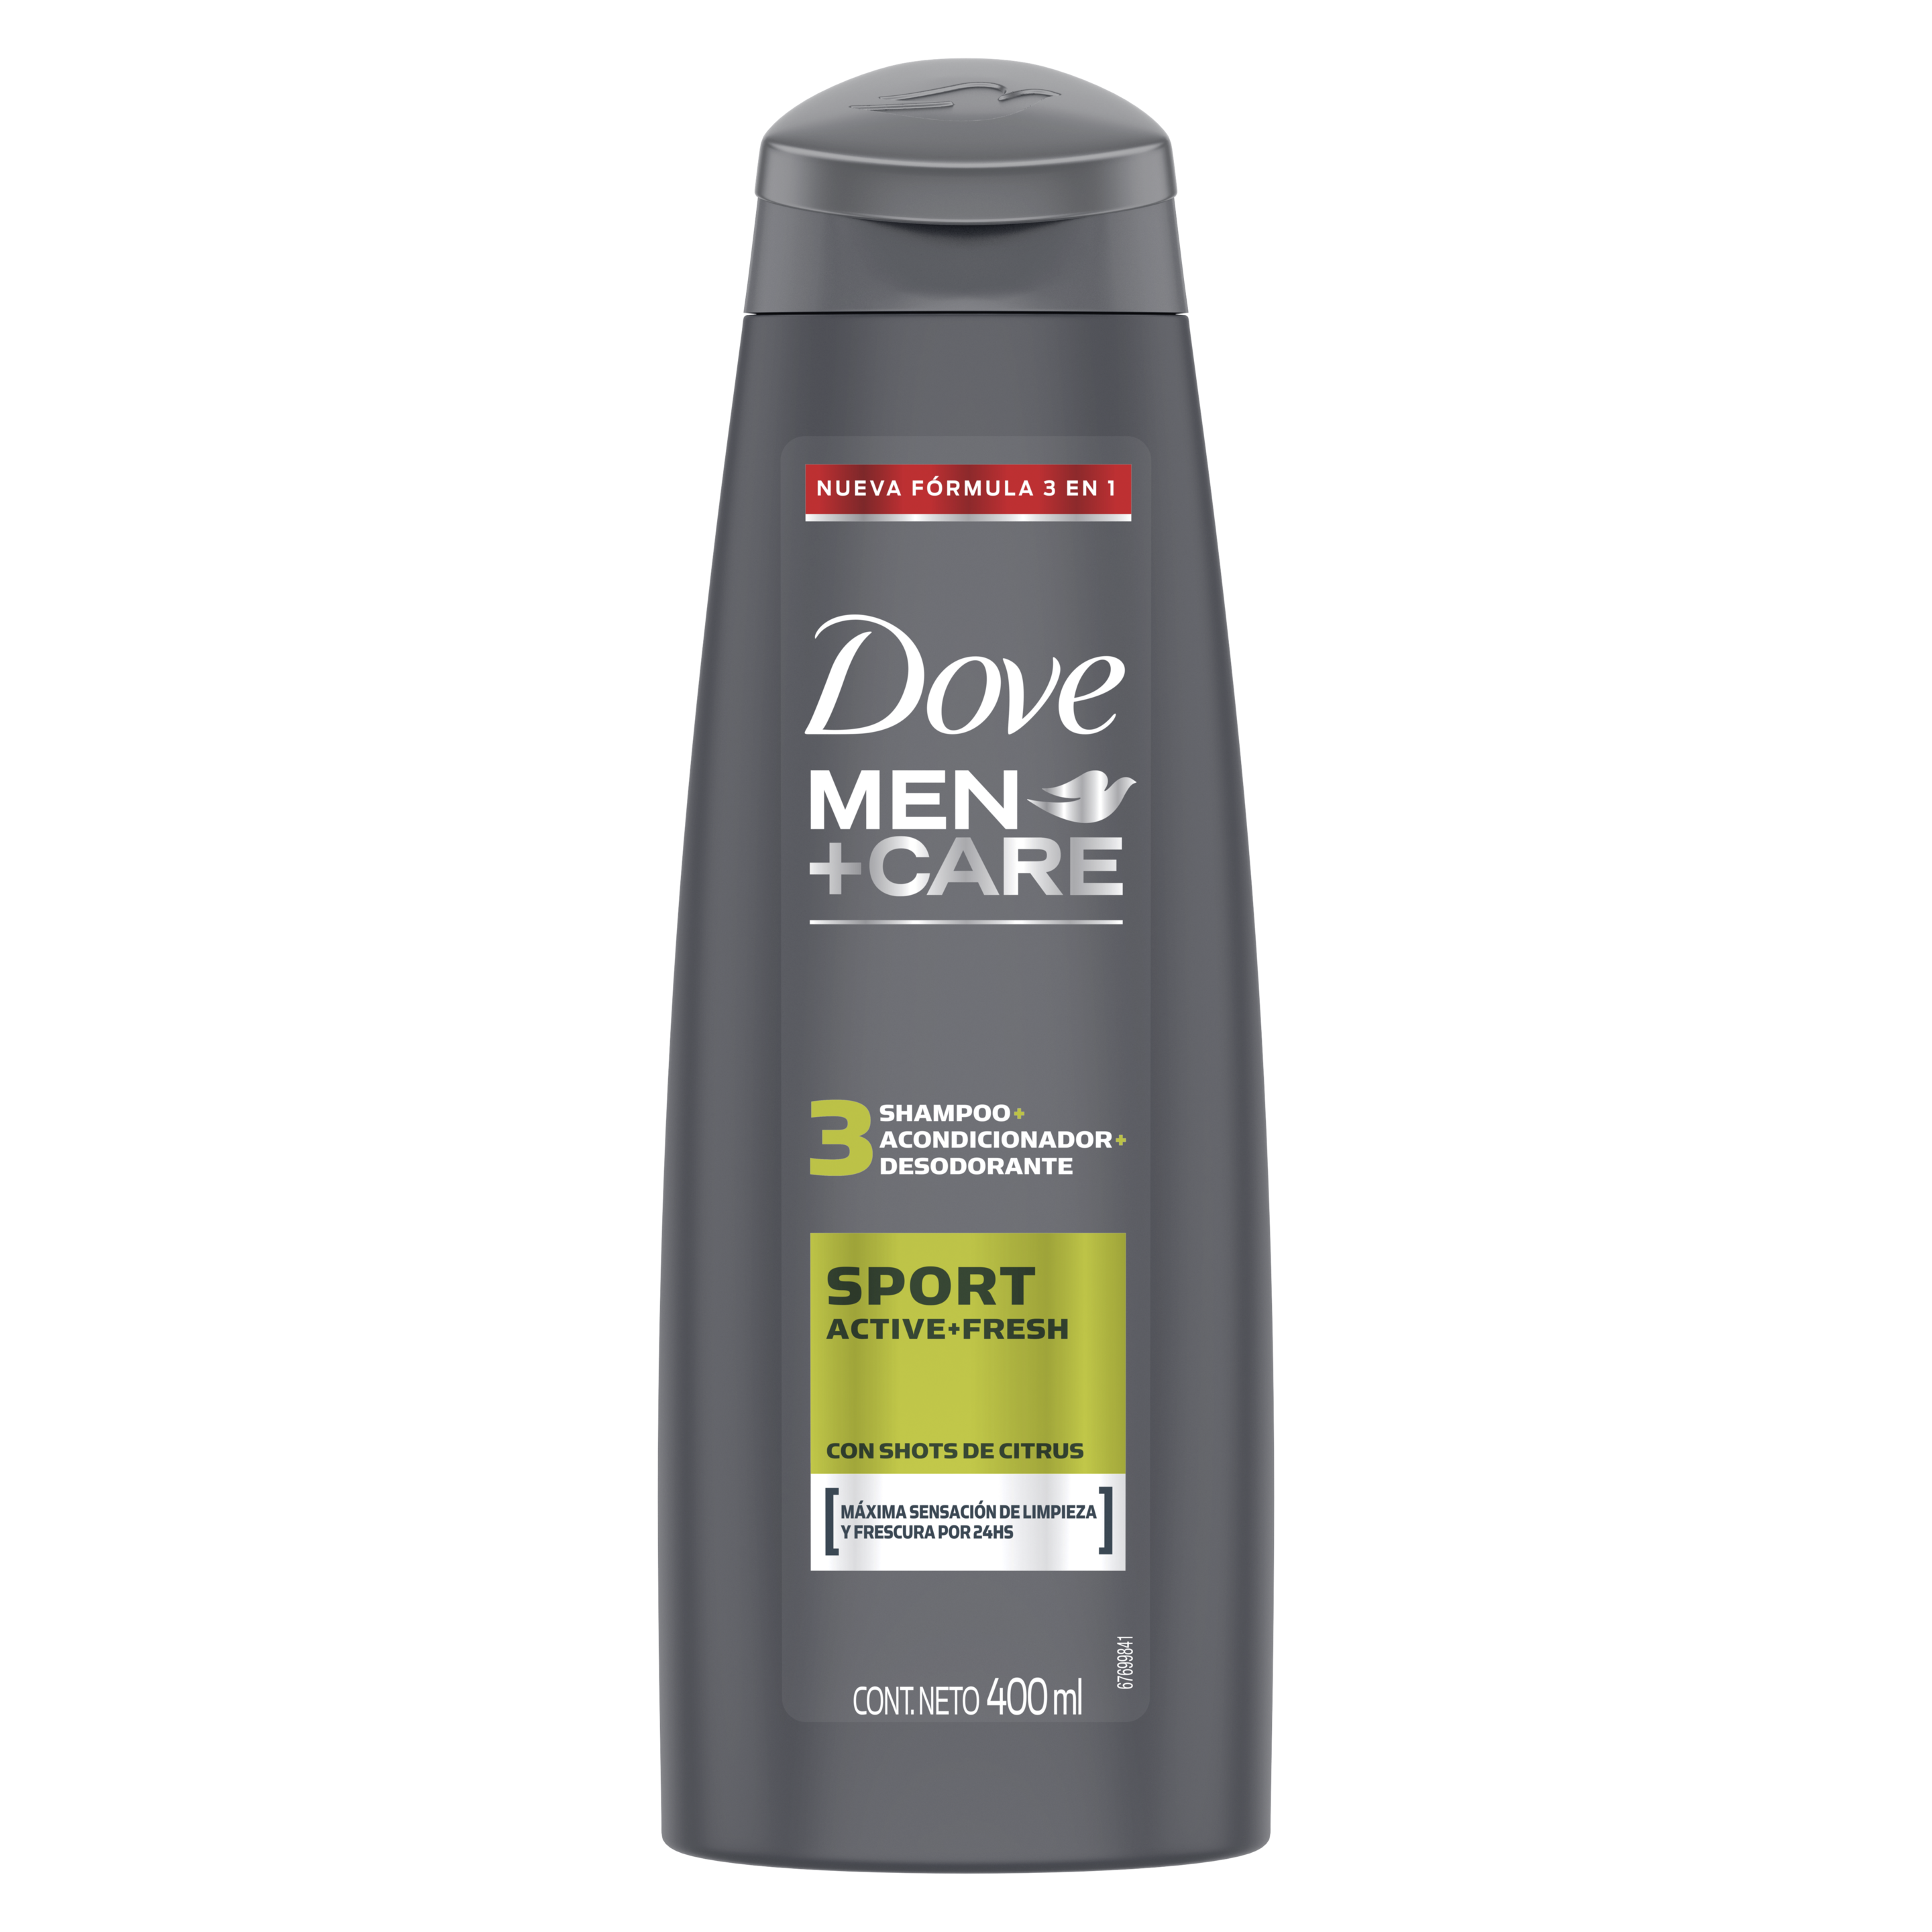 Dove Men+Care Shampoo 3 en 1 Sports Active Fresh 400ml